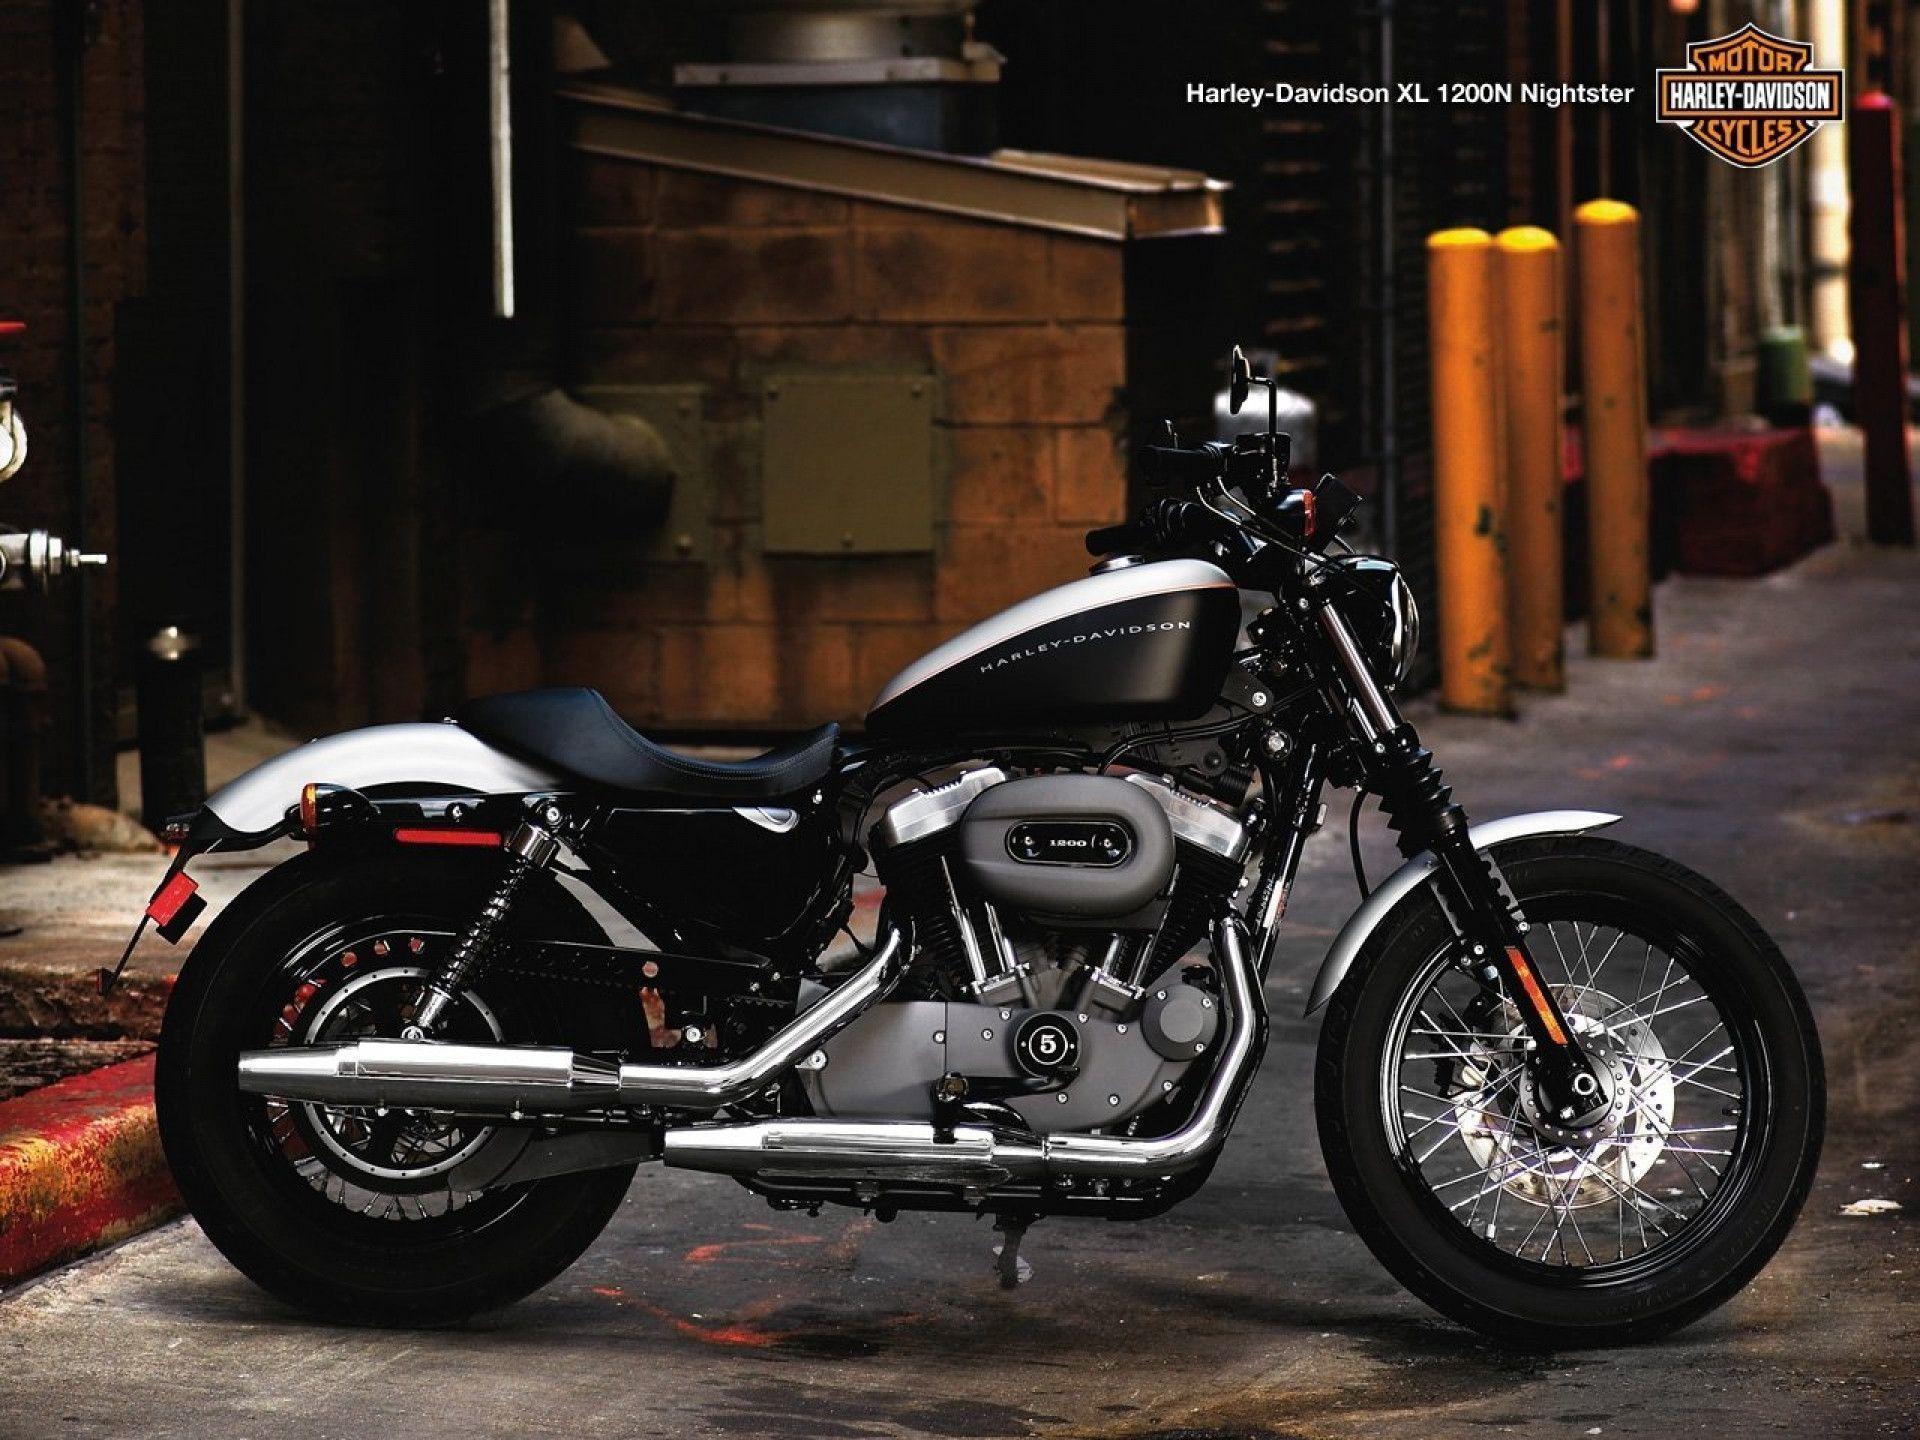 Amusing Harley Davidson Sportster Nightster Wallpaper 1920x1440PX